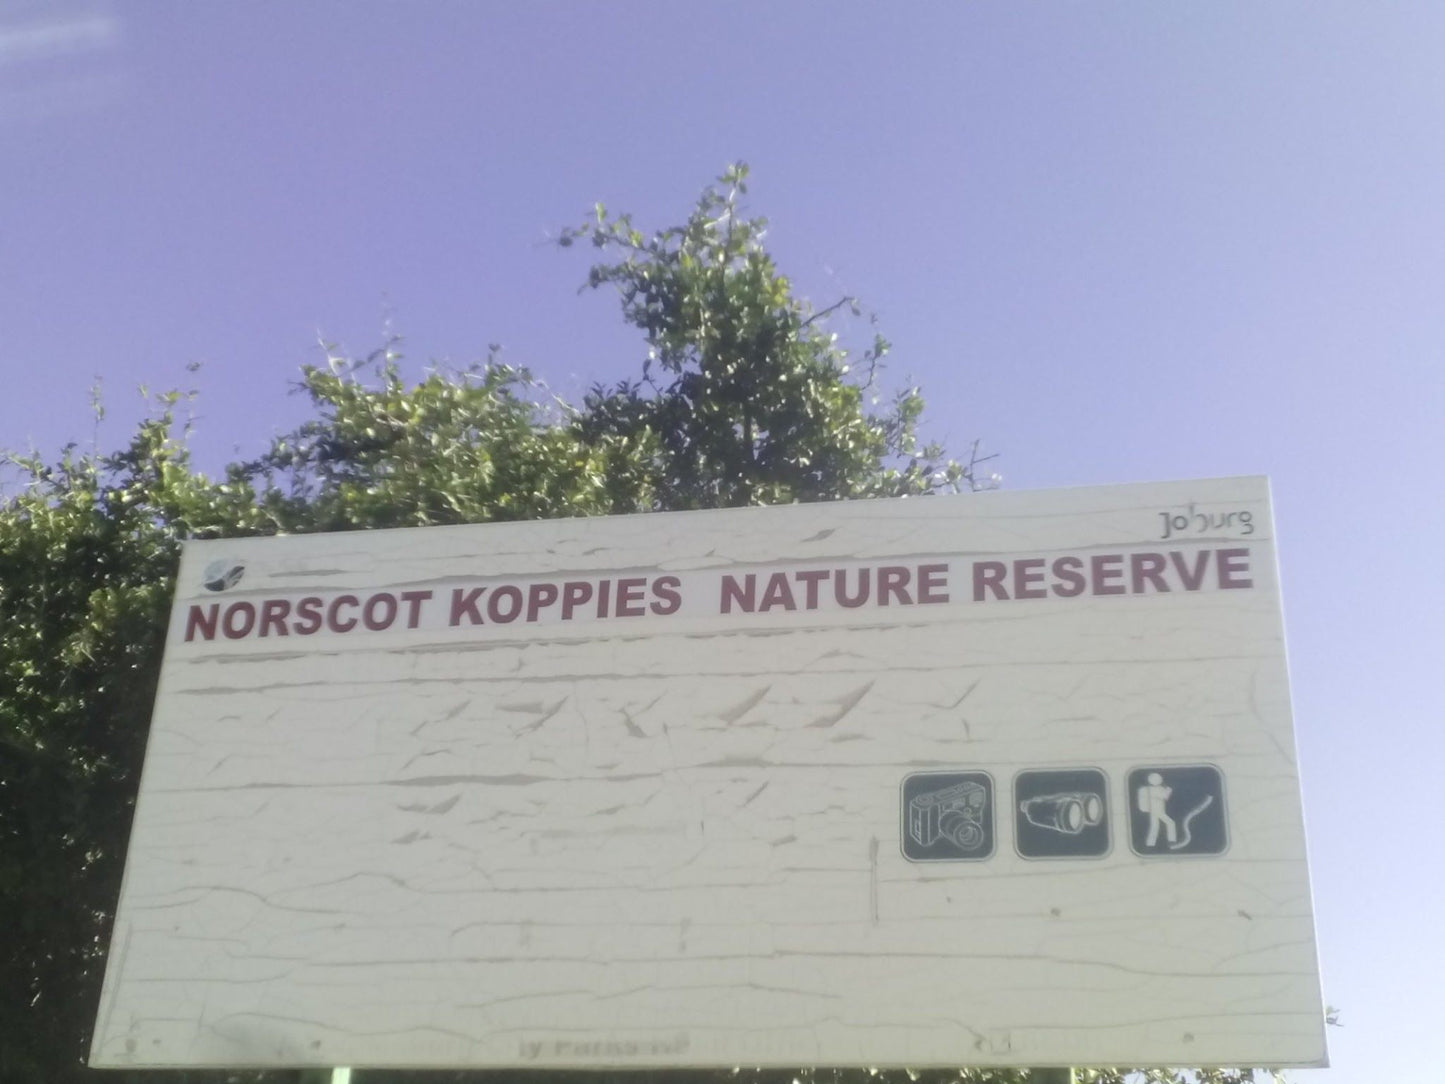  Norscot Koppies Nature Reserve